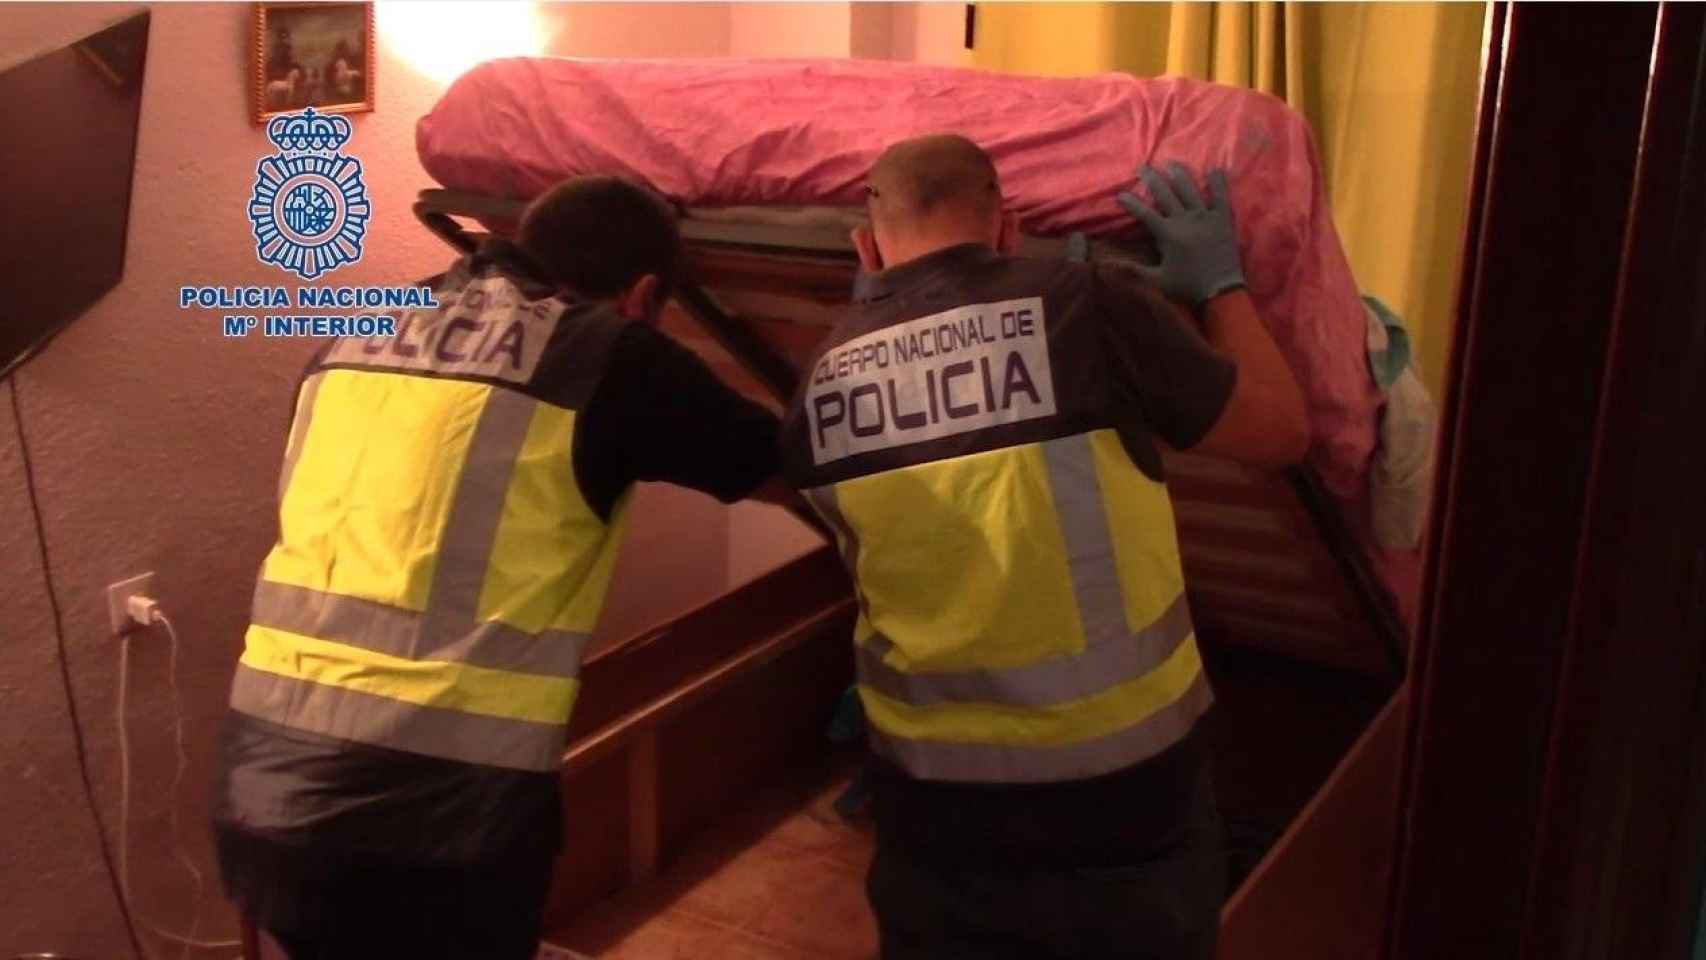 Operación de la PN que ha liberado en Vélez-Málaga siete víctimas de explotación sexual sometidas a vigilancia a través de cámaras ocultas / EP